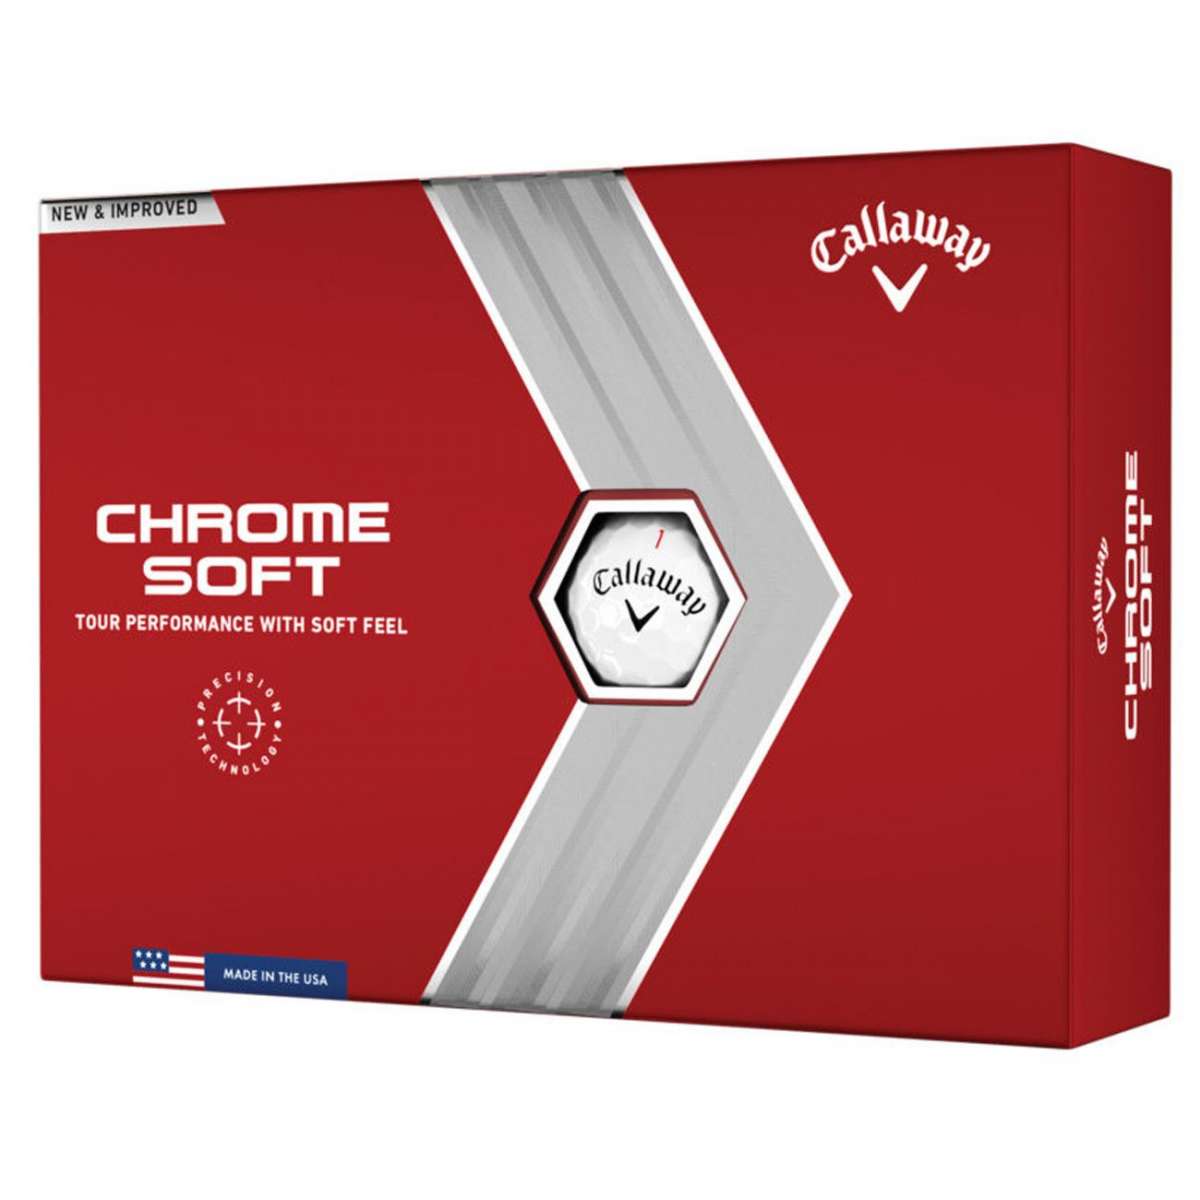 Callaway Chrome Soft Golfbälle, 12 Stück günstig kaufen Golflädchen